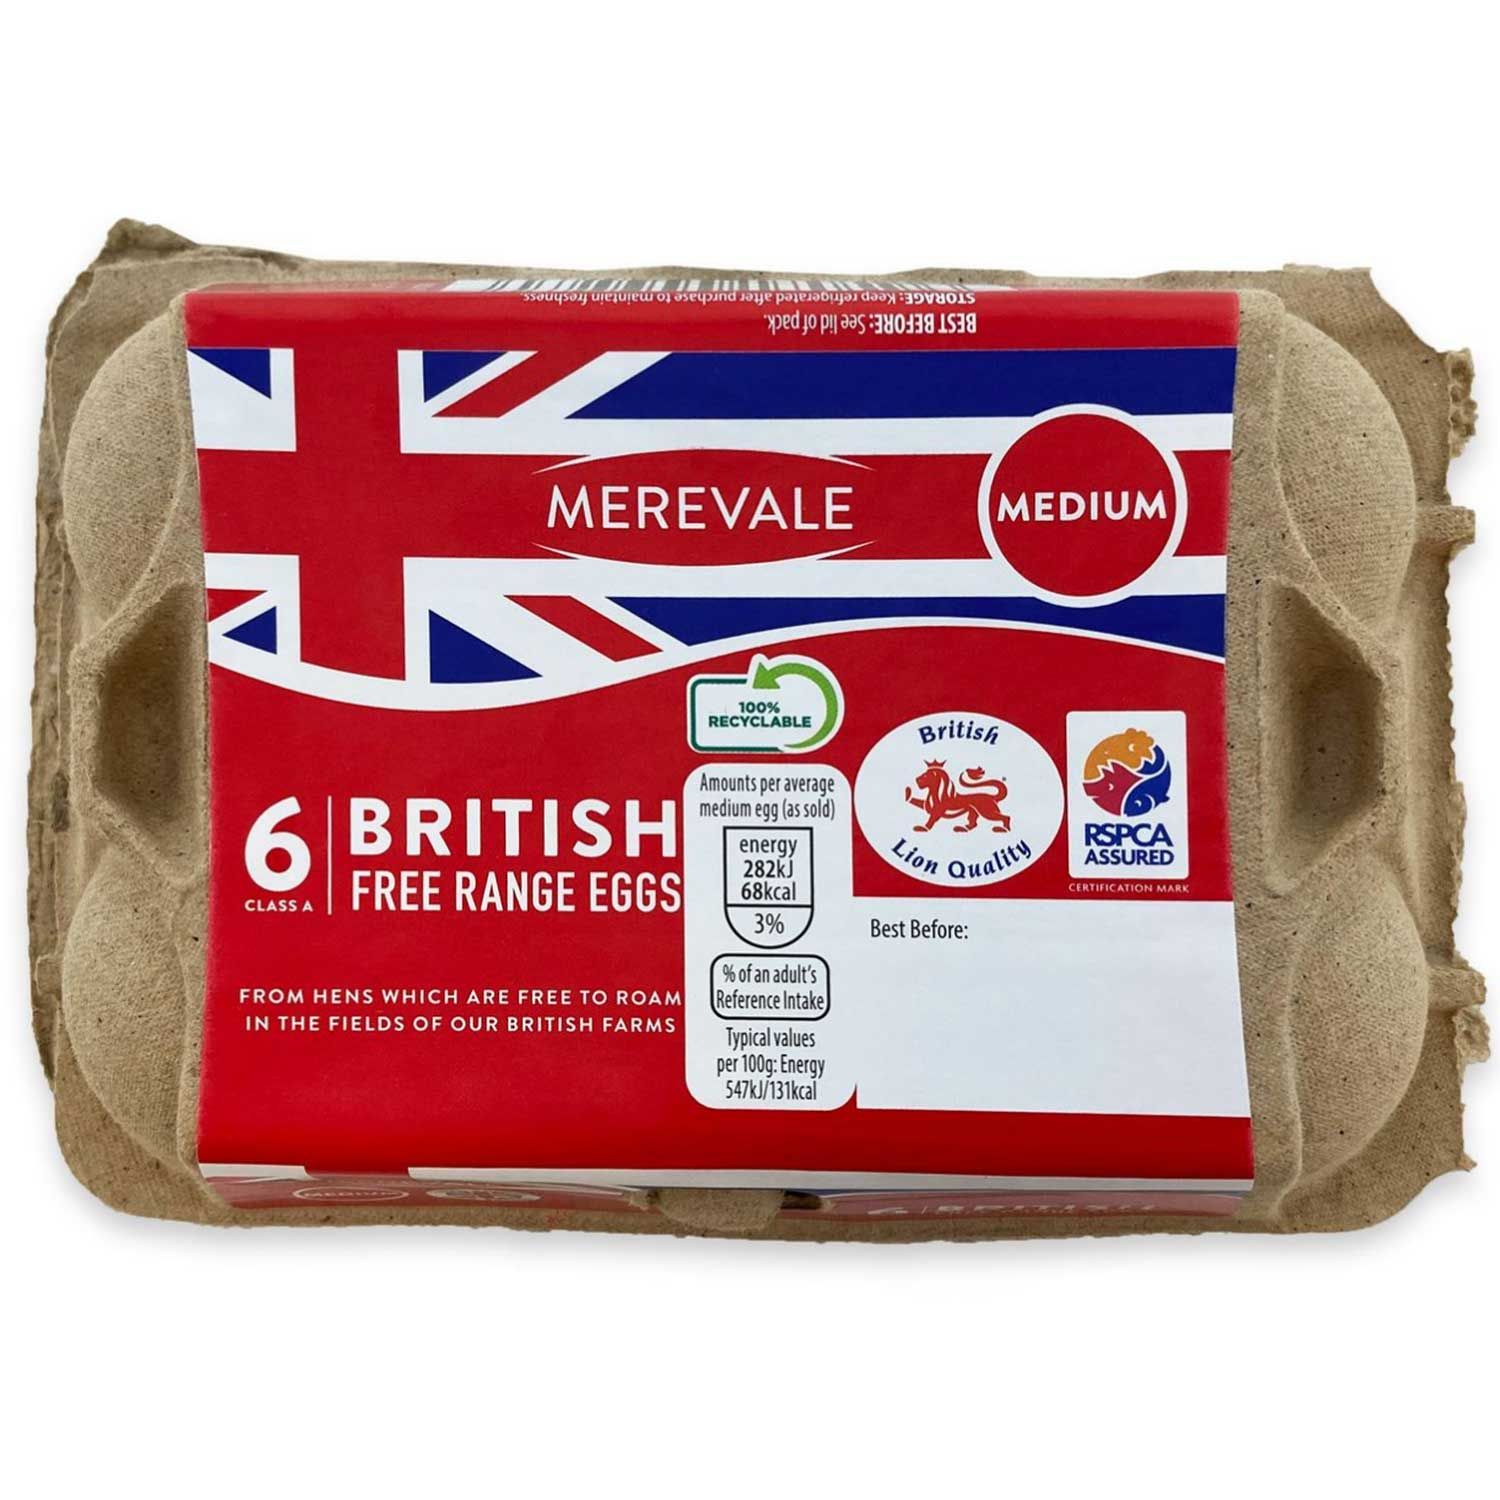 Merevale British Free Range Medium Eggs 318g/6 Pack